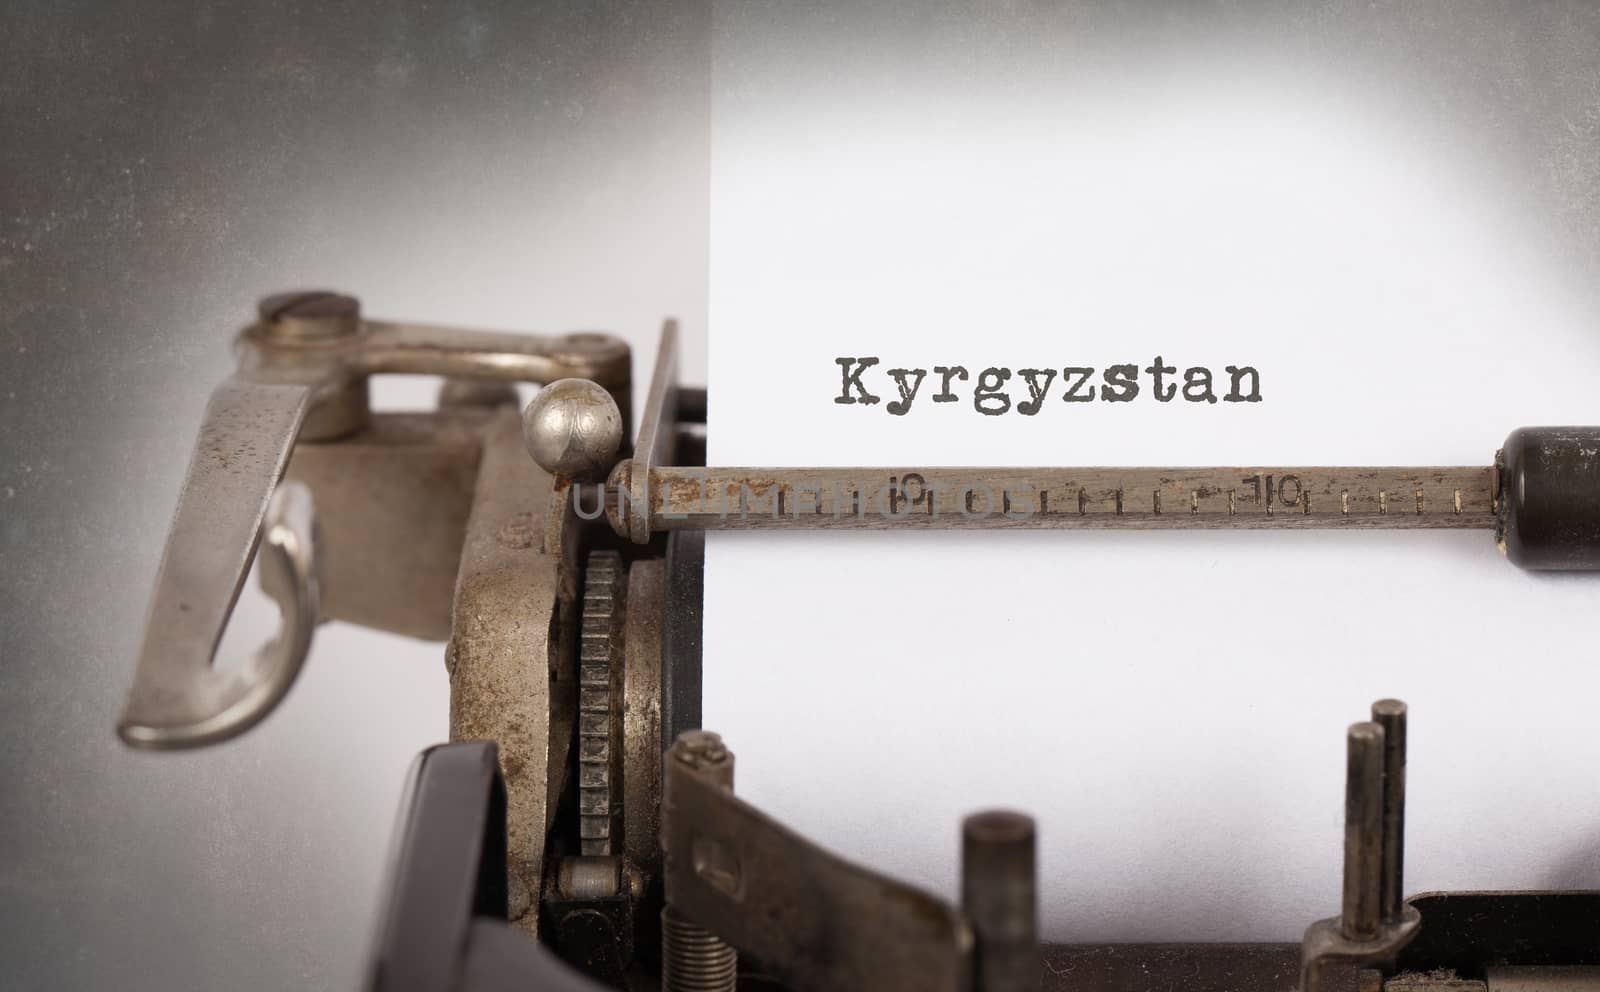 Old typewriter - Kyrgyzstan by michaklootwijk